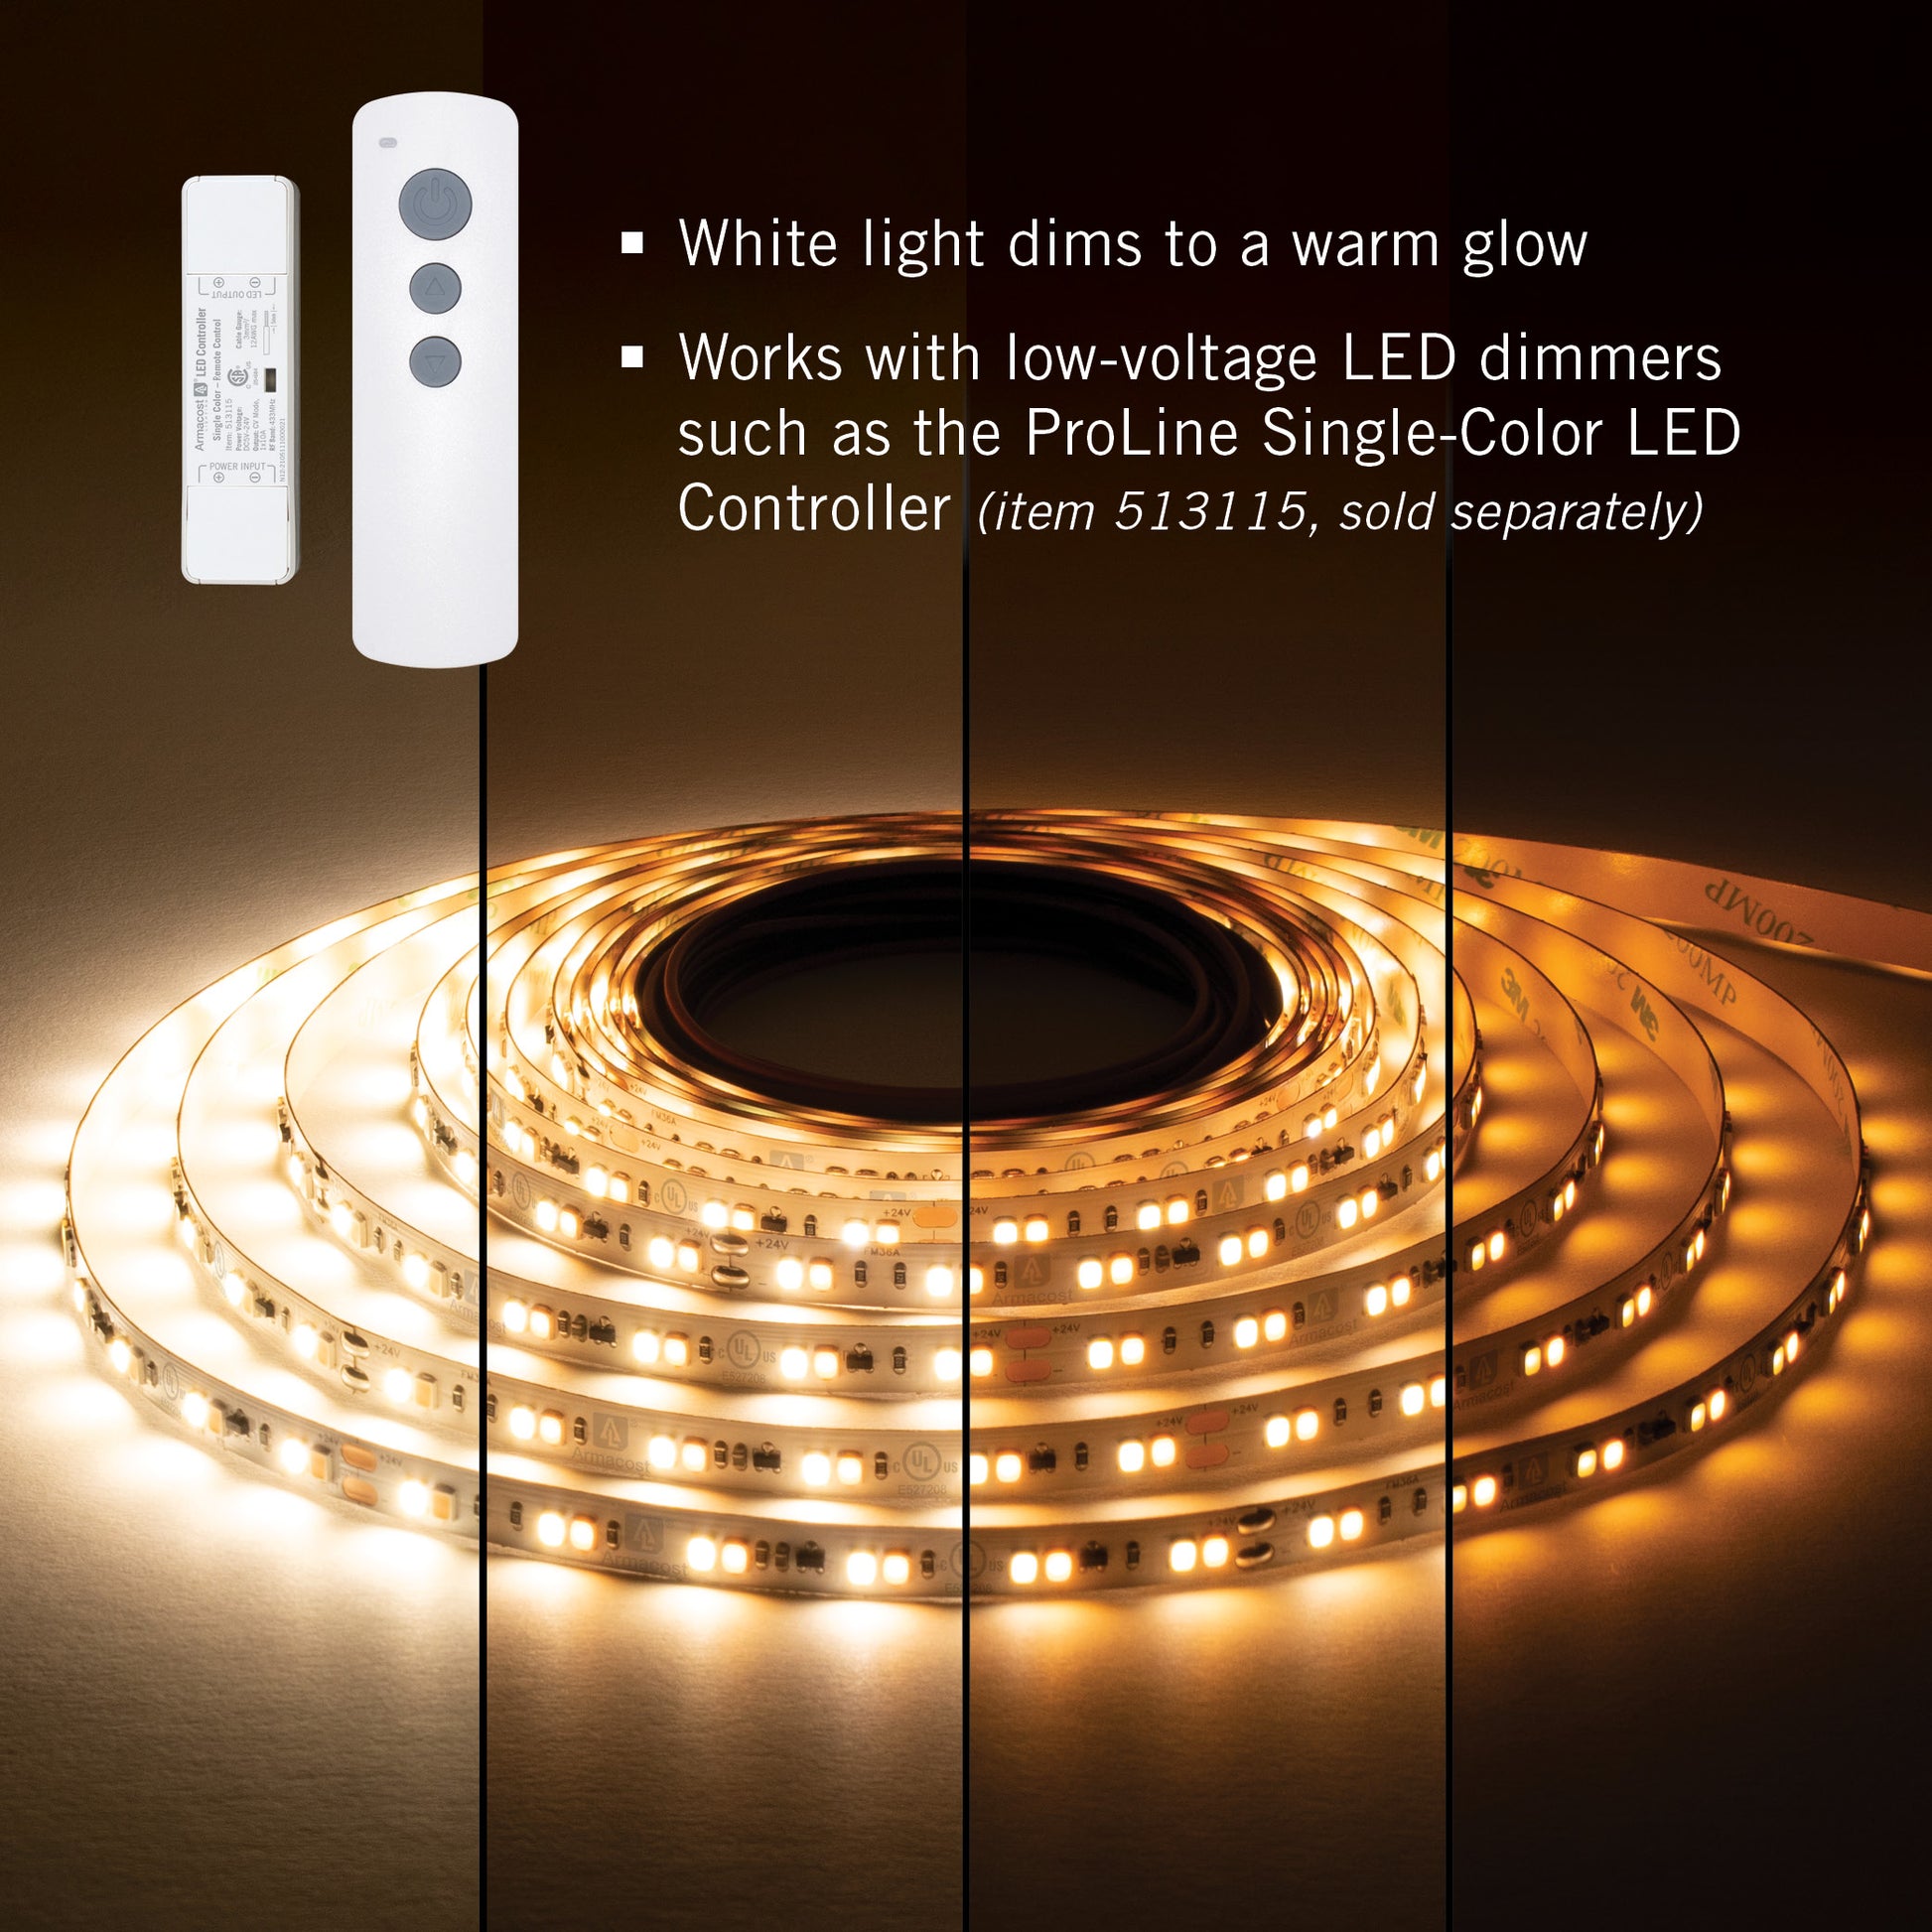 UL-Listed 24V Commercial Grade LED Strip